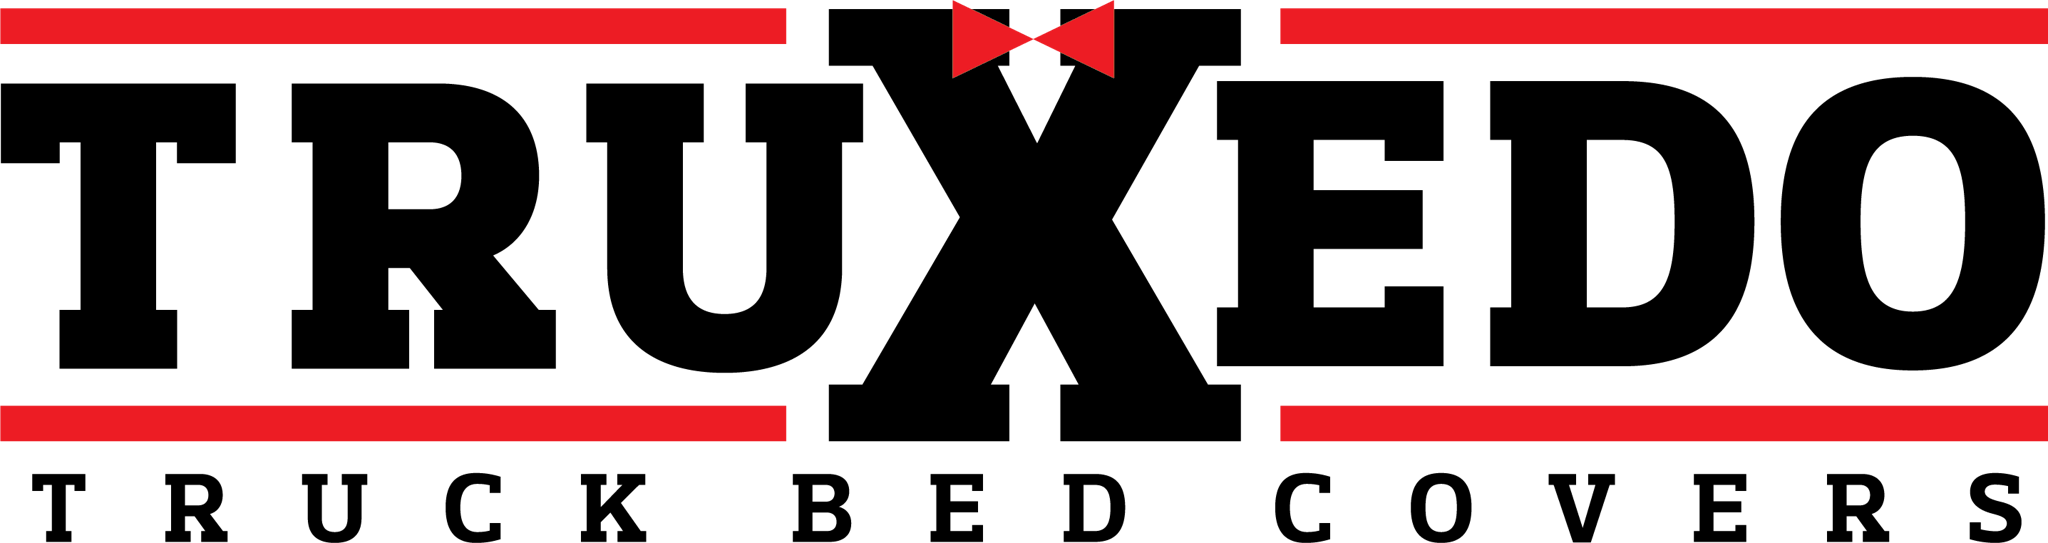 TruXedo logo